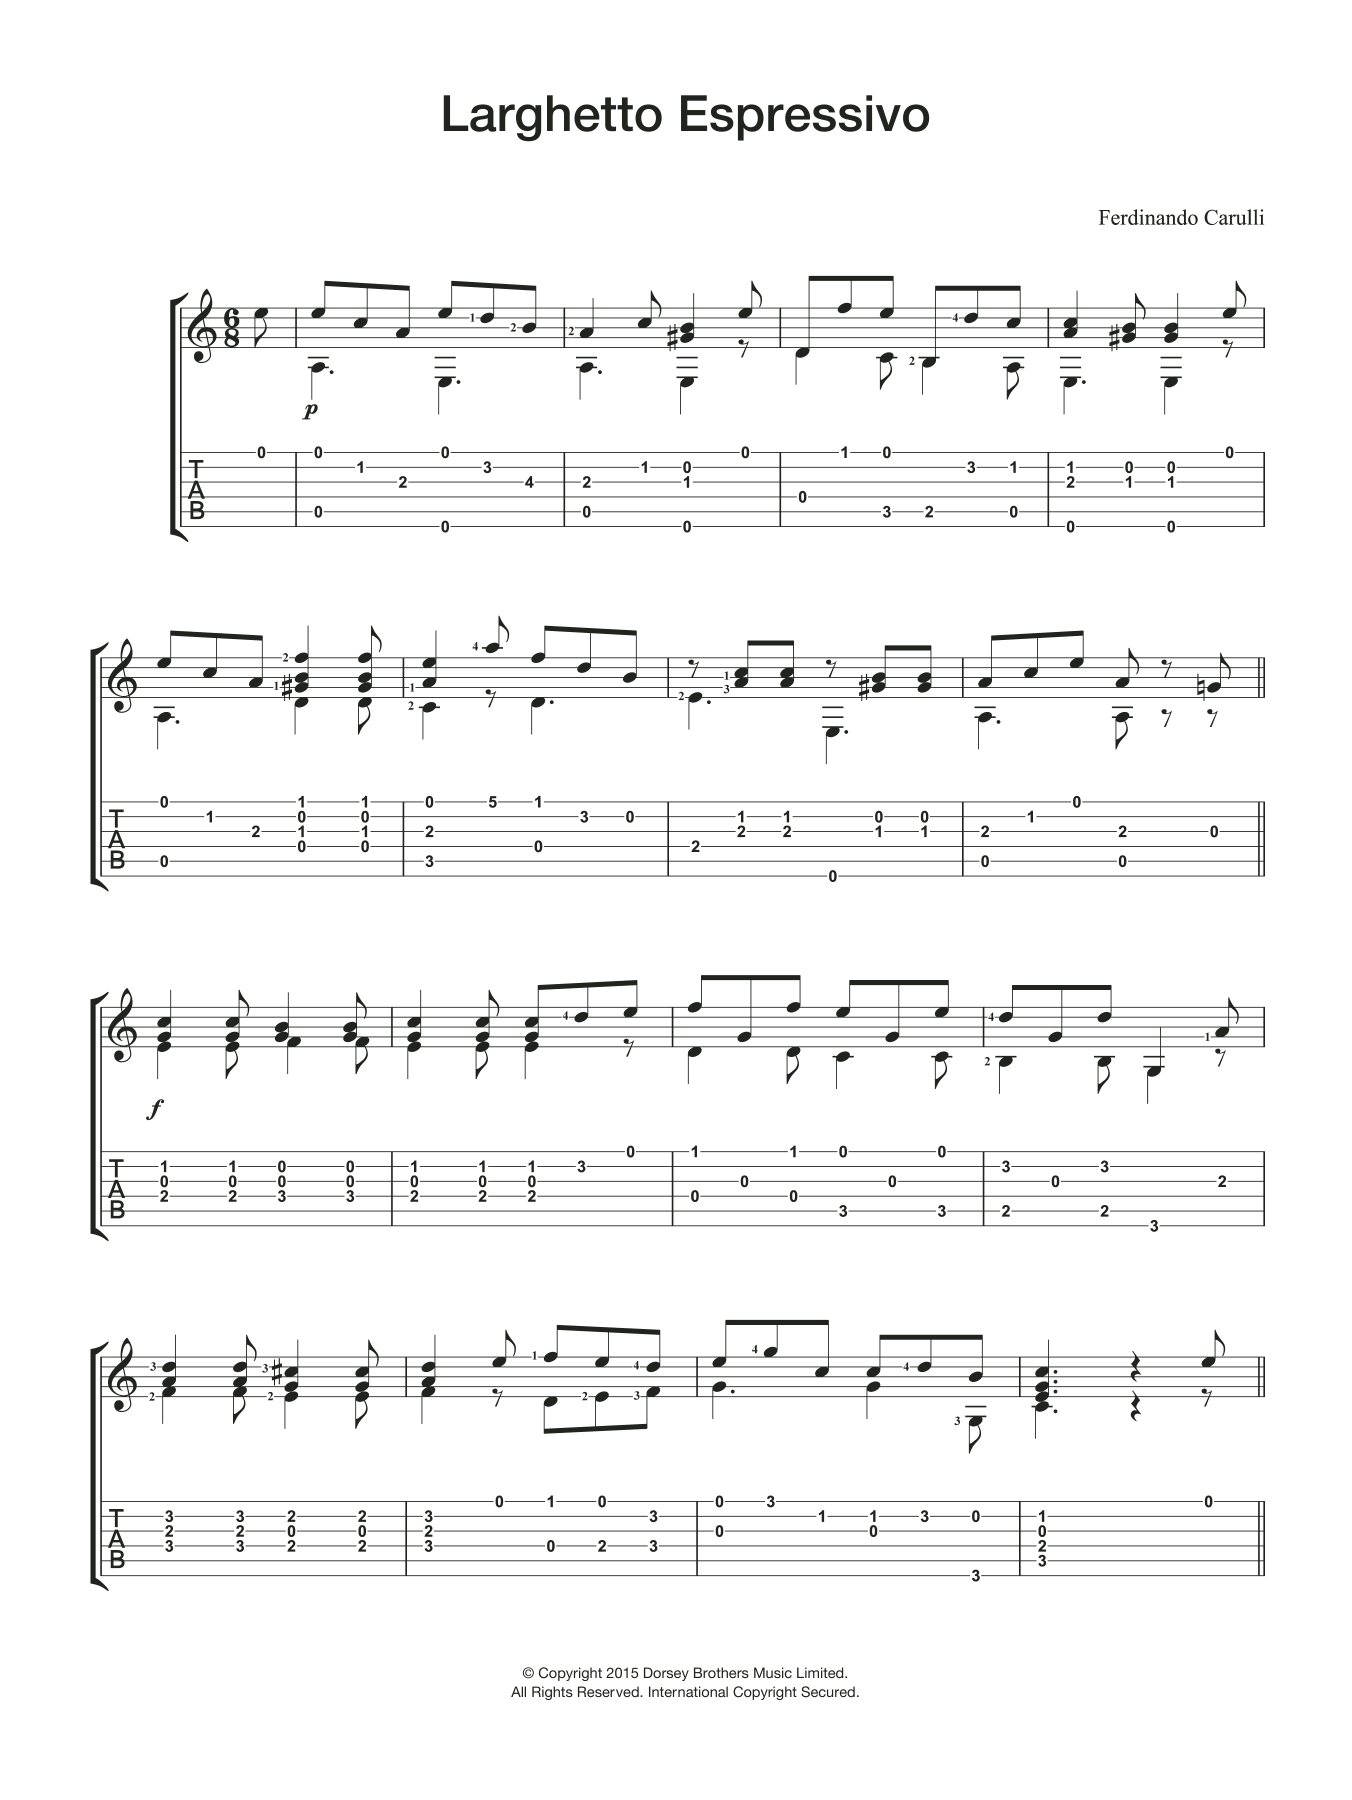 Ferdinando Carulli Larghetto Espressivo Sheet Music Notes & Chords for Guitar - Download or Print PDF